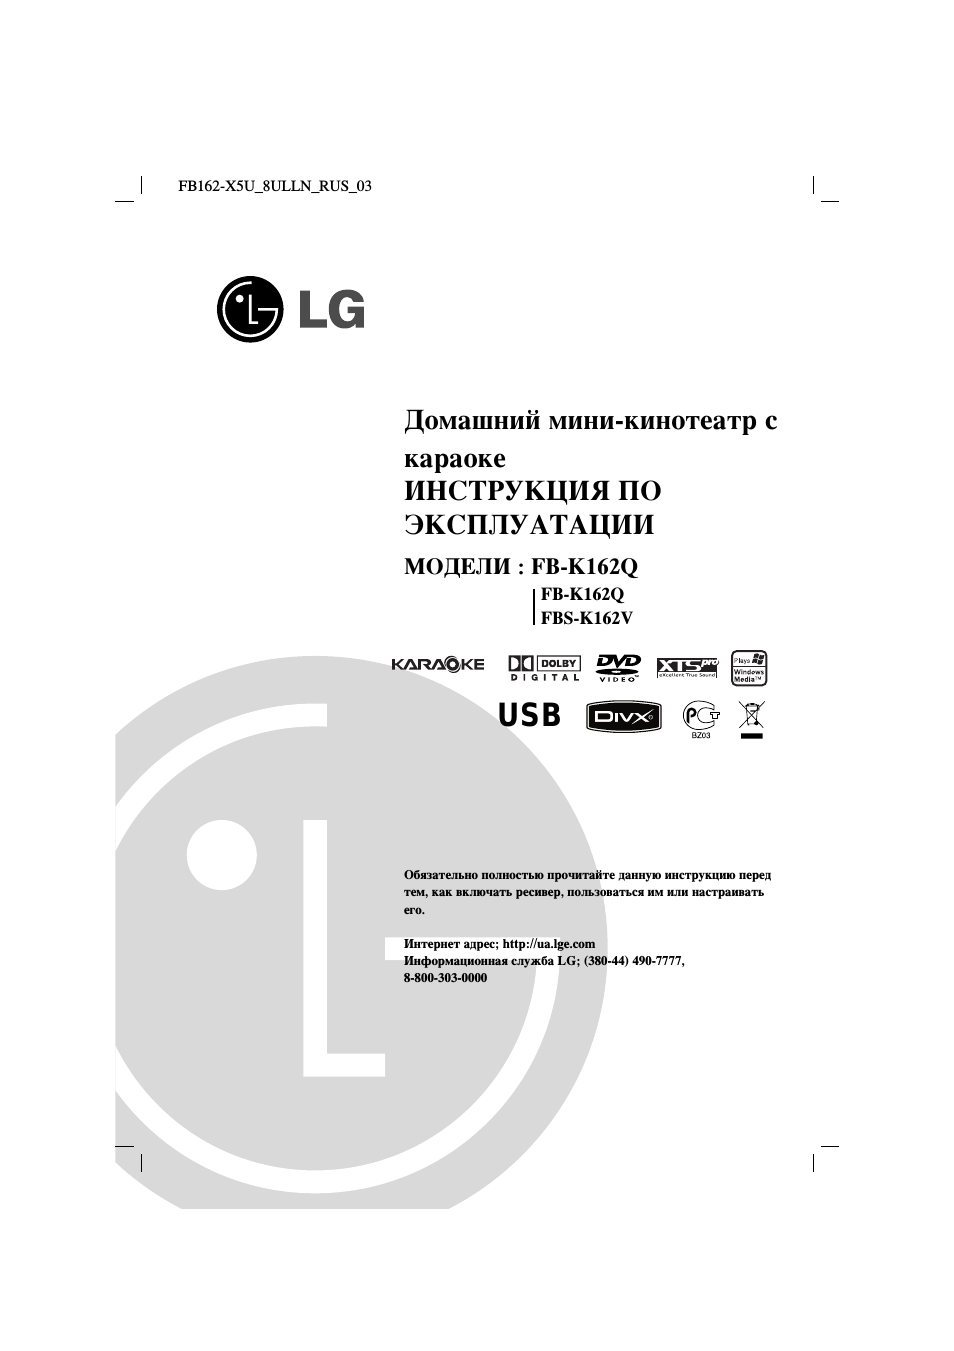 Инструкция по эксплуатации LG FB-K162Q | 31 cтраница